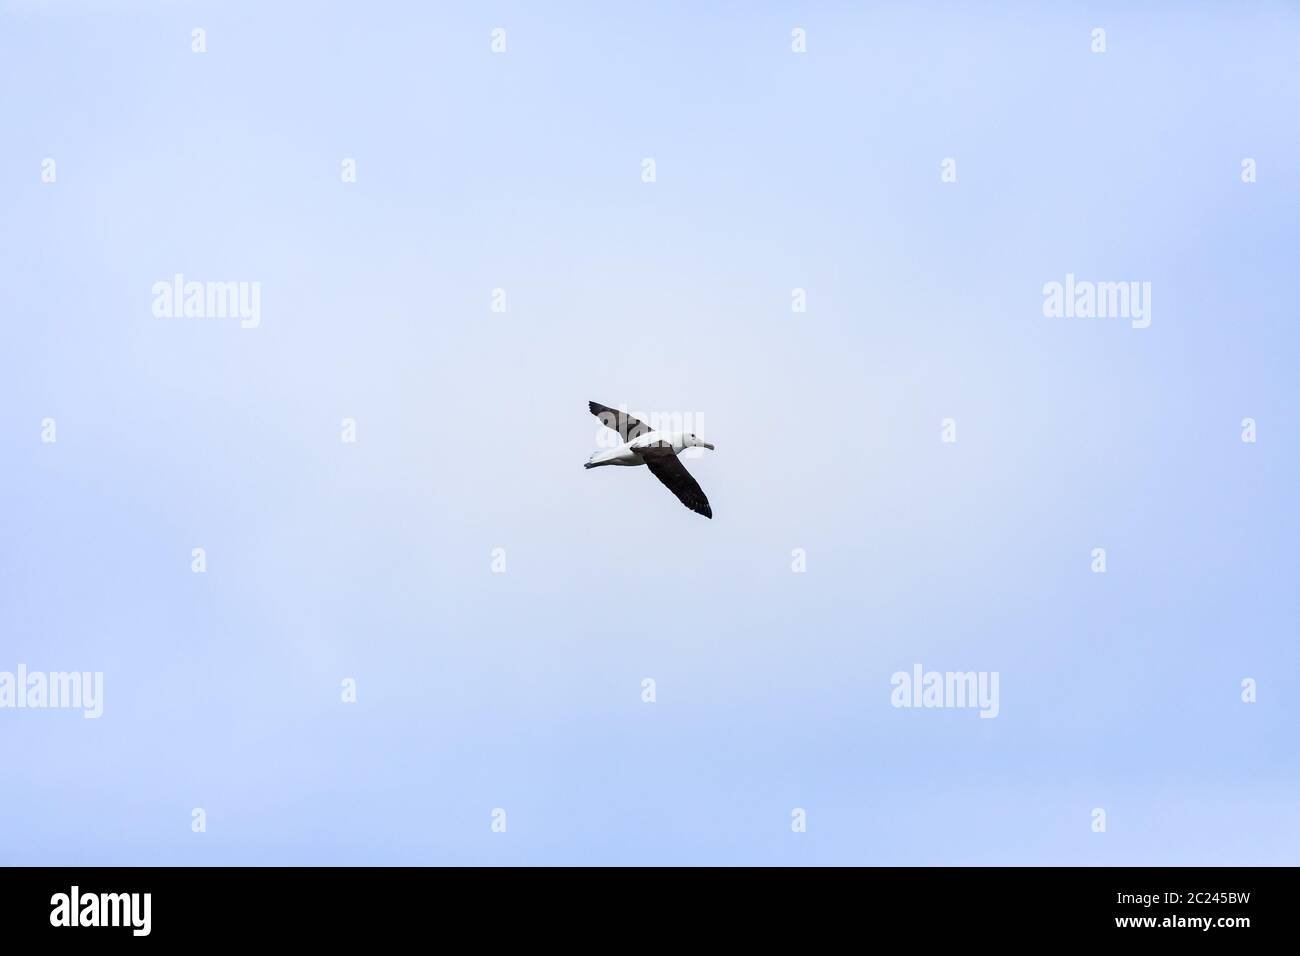 Albatross bird in the sky Stock Photo